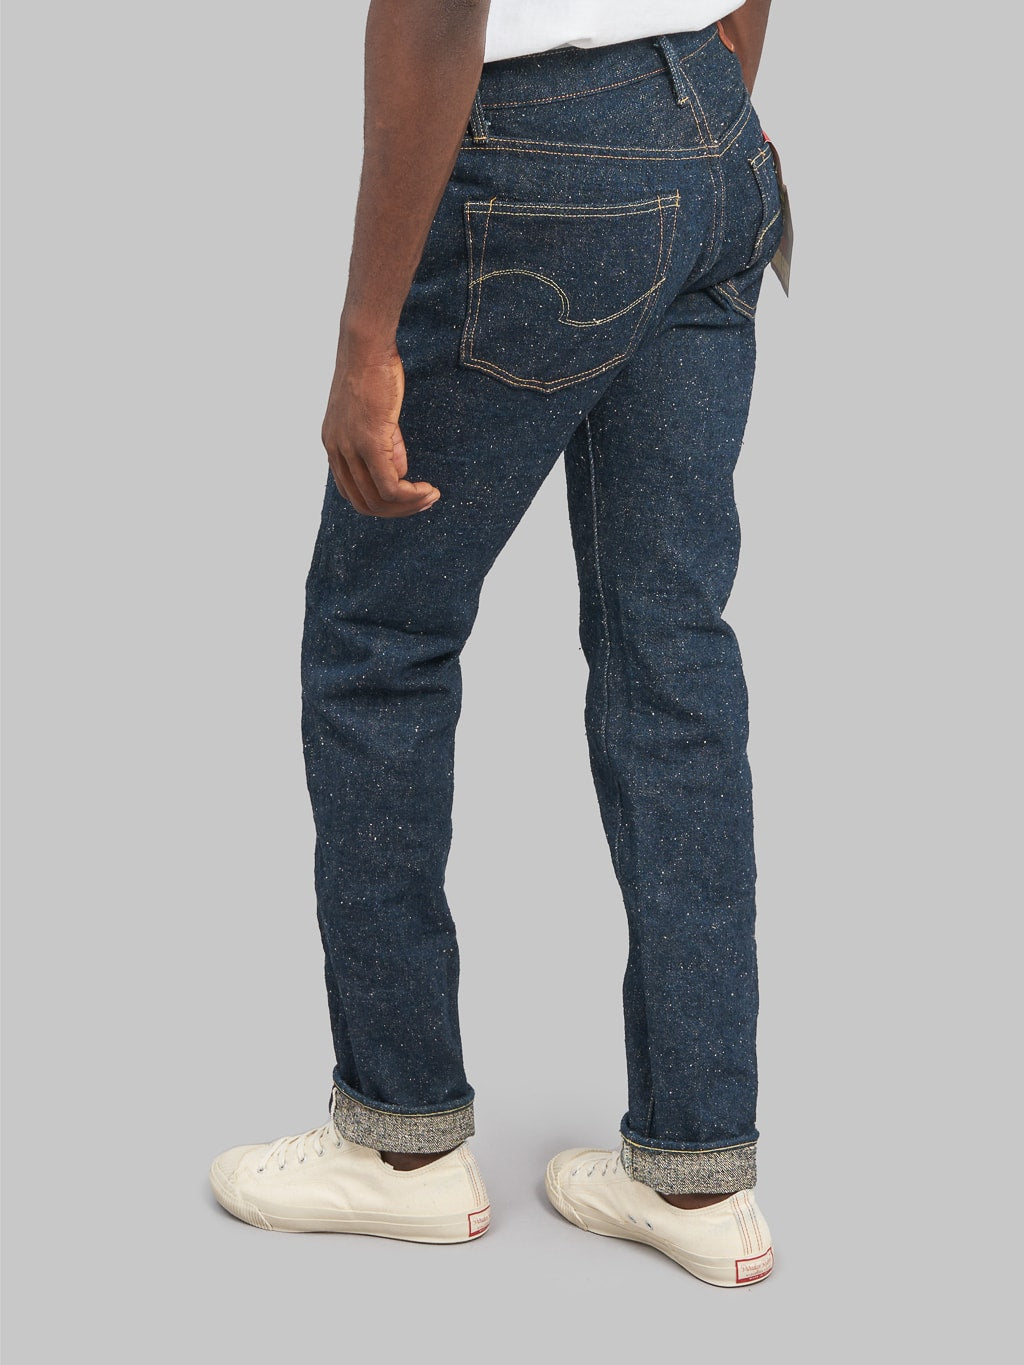 ONI Denim 246SESR Secret Super Rough Neat Straight selvedge Jeans style